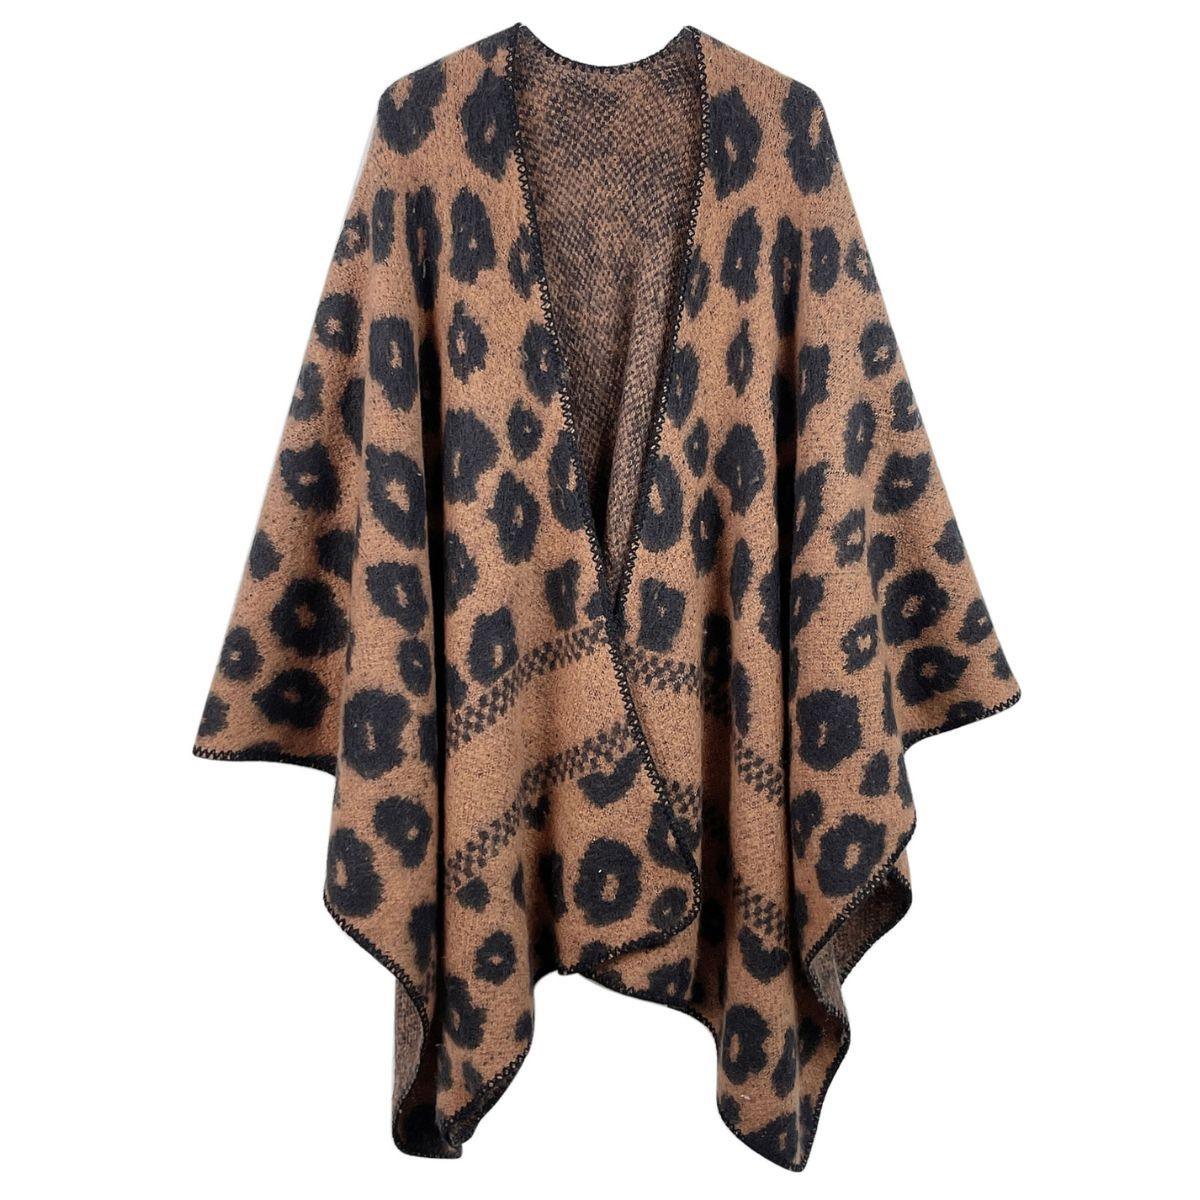 Versatile Leopard Print Kimono Cardigan Brown-black: Unleash Your Wild Side